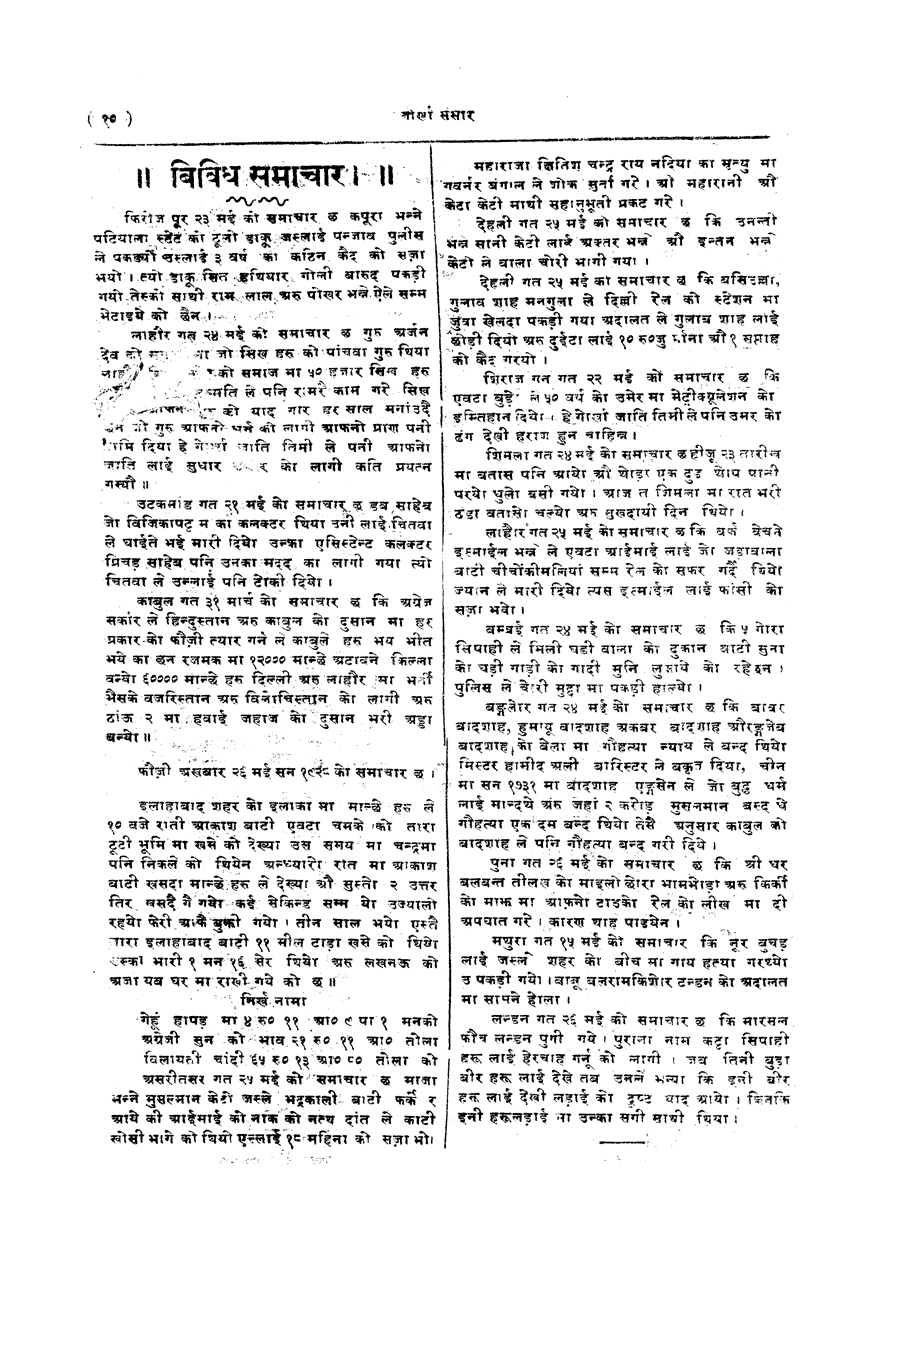 Gorkha Sansar, 1 June 1928, page 10